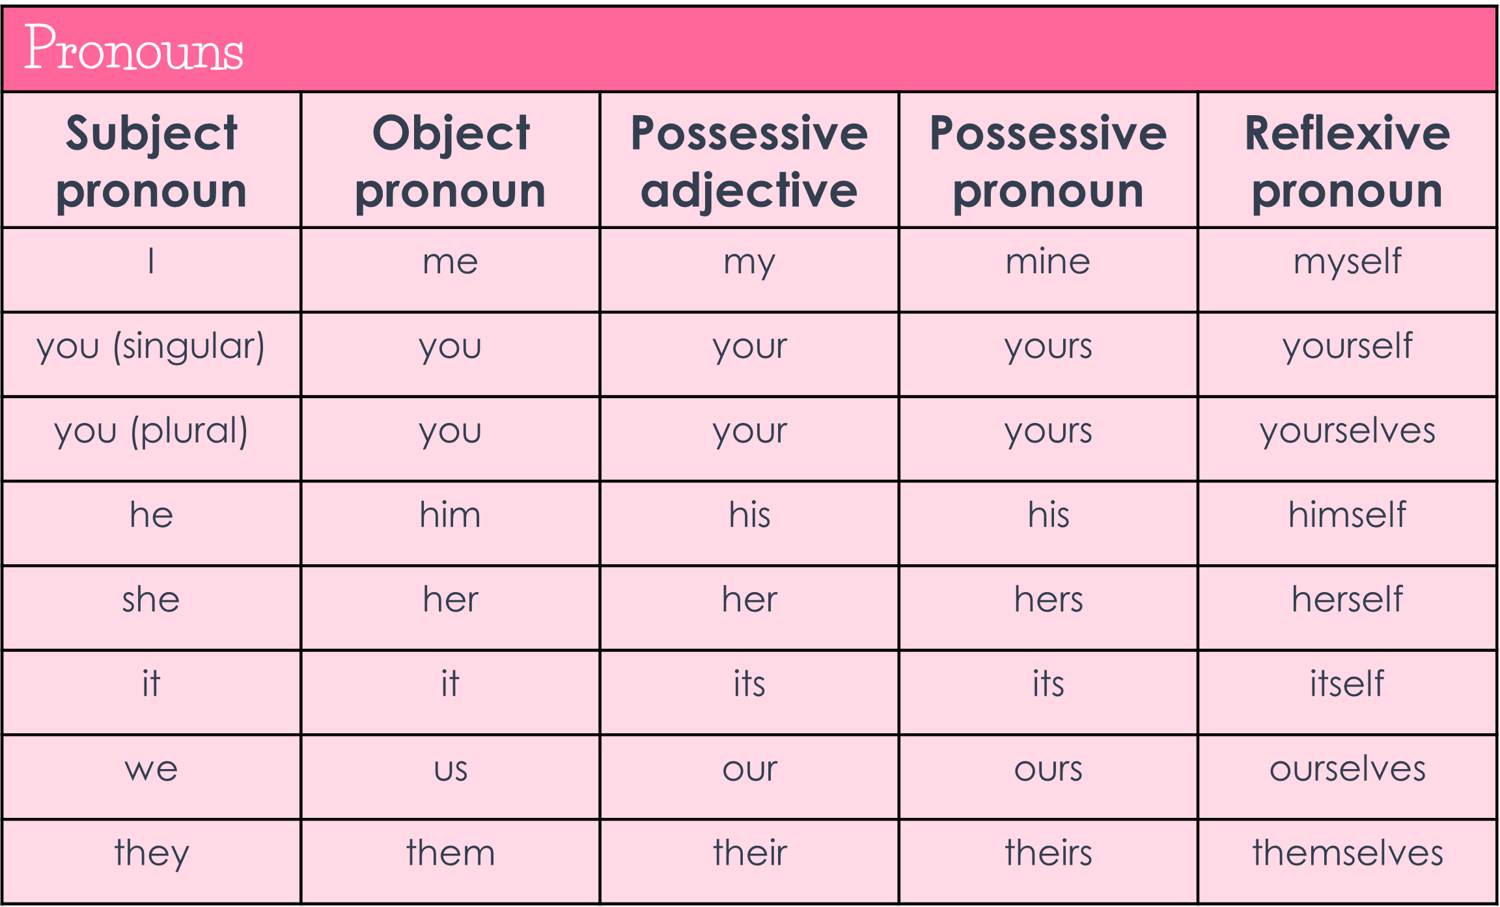 Subject, object, possessive, and reflexive pronouns